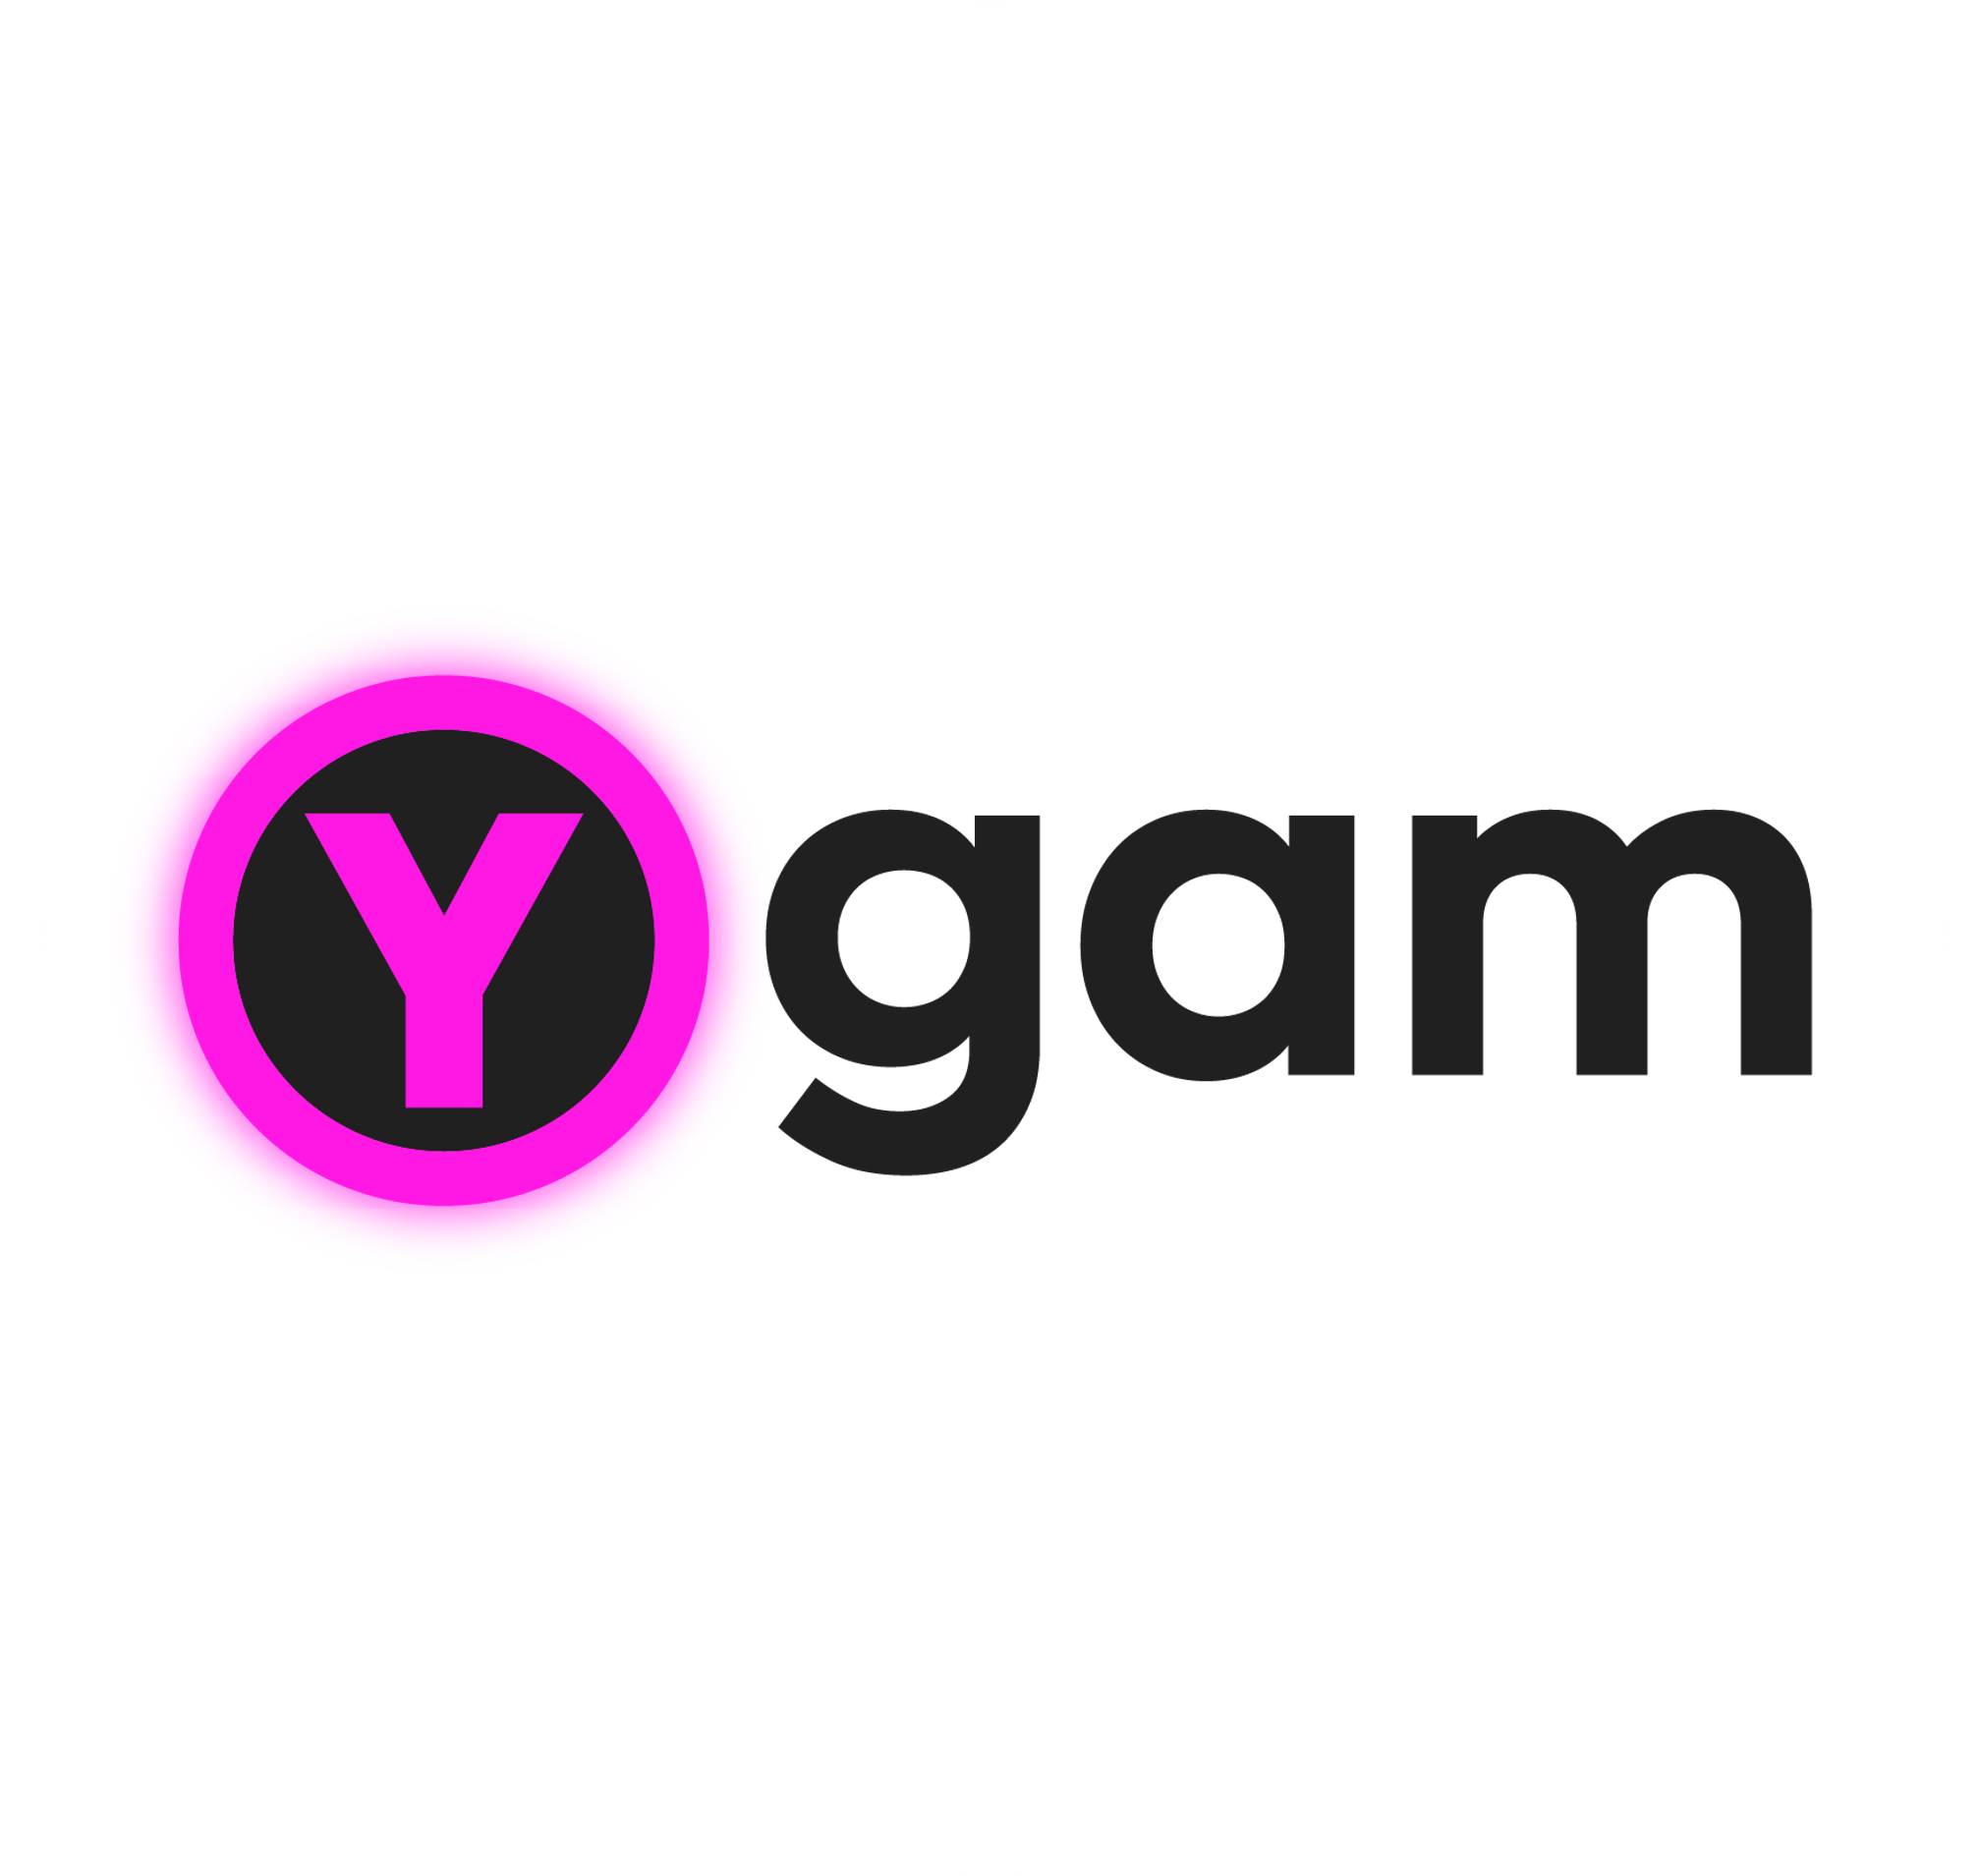 Ygam logo